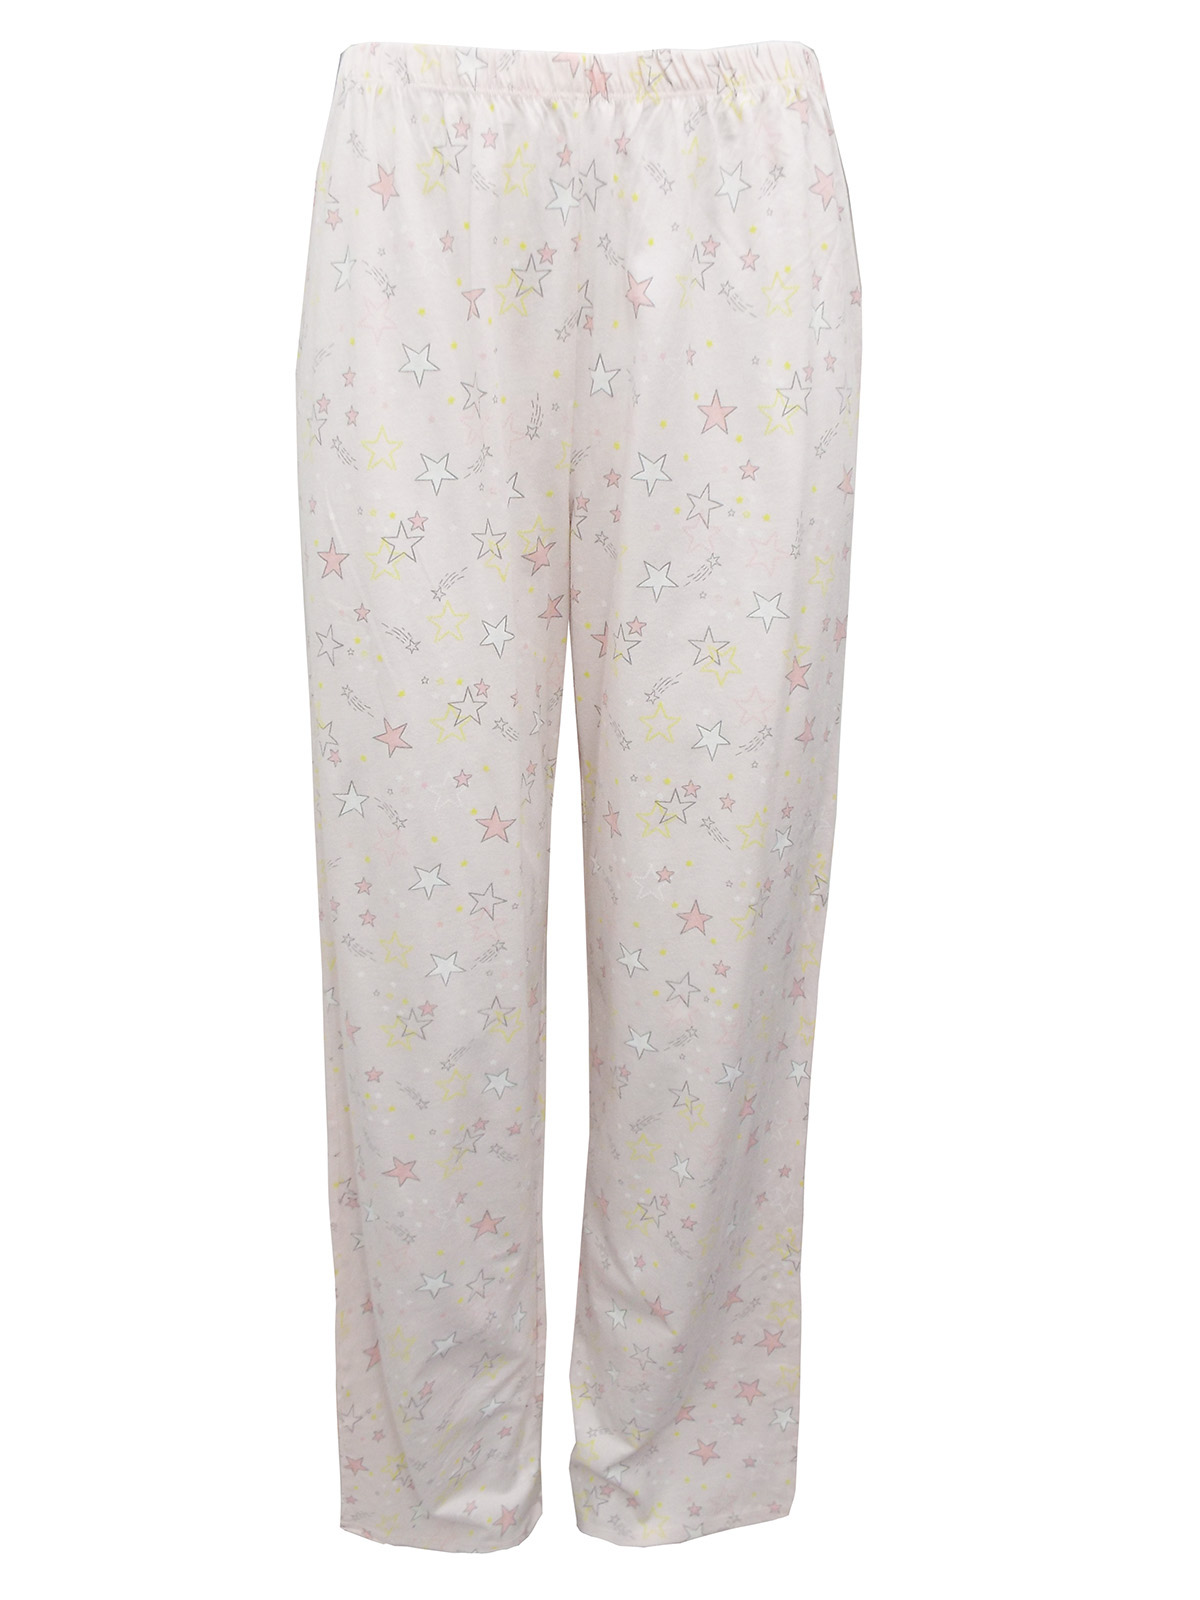 Marks and Spencer - - M&5 PINK Pure Cotton Star Print Pyjama Set - Size ...